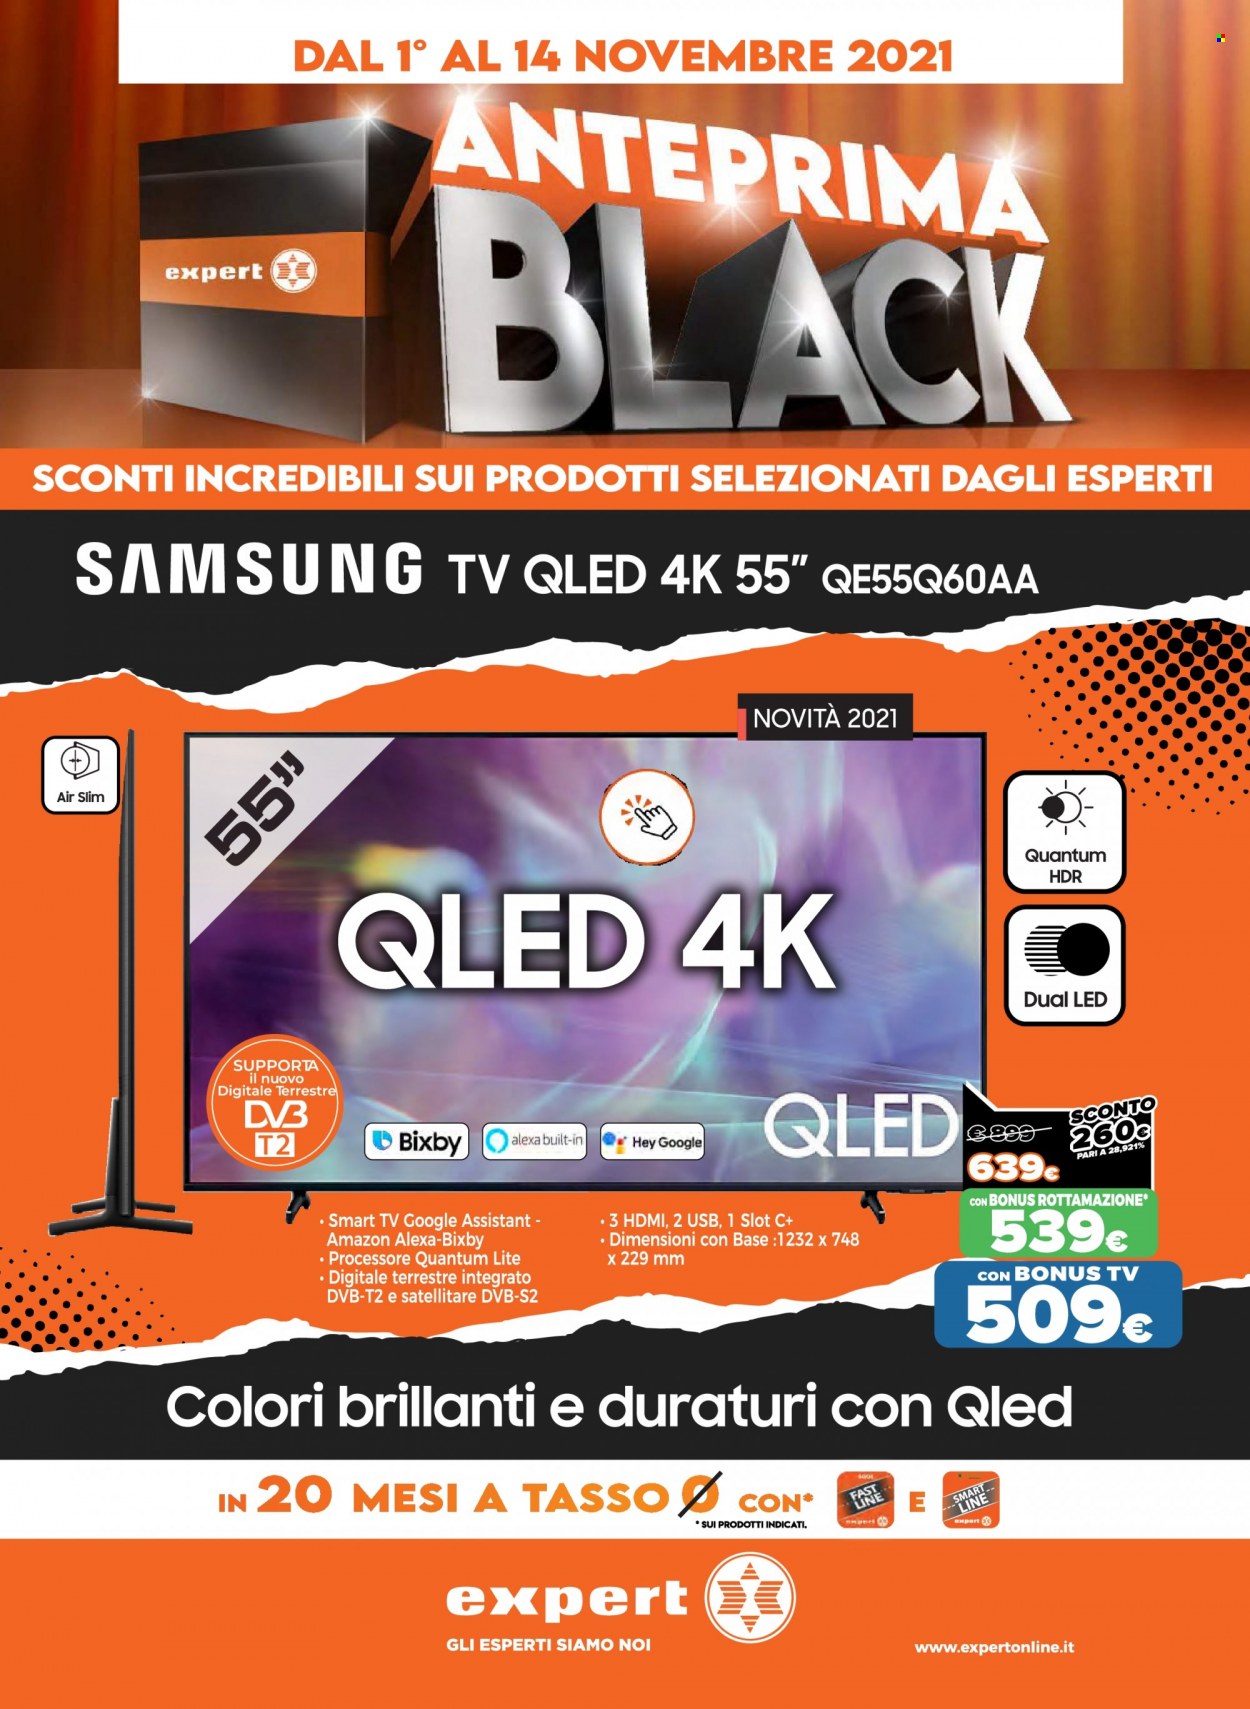 thumbnail - Volantino Expert - 1/11/2021 - 14/11/2021 - Prodotti in offerta - Samsung, Smart TV, televisore. Pagina 1.